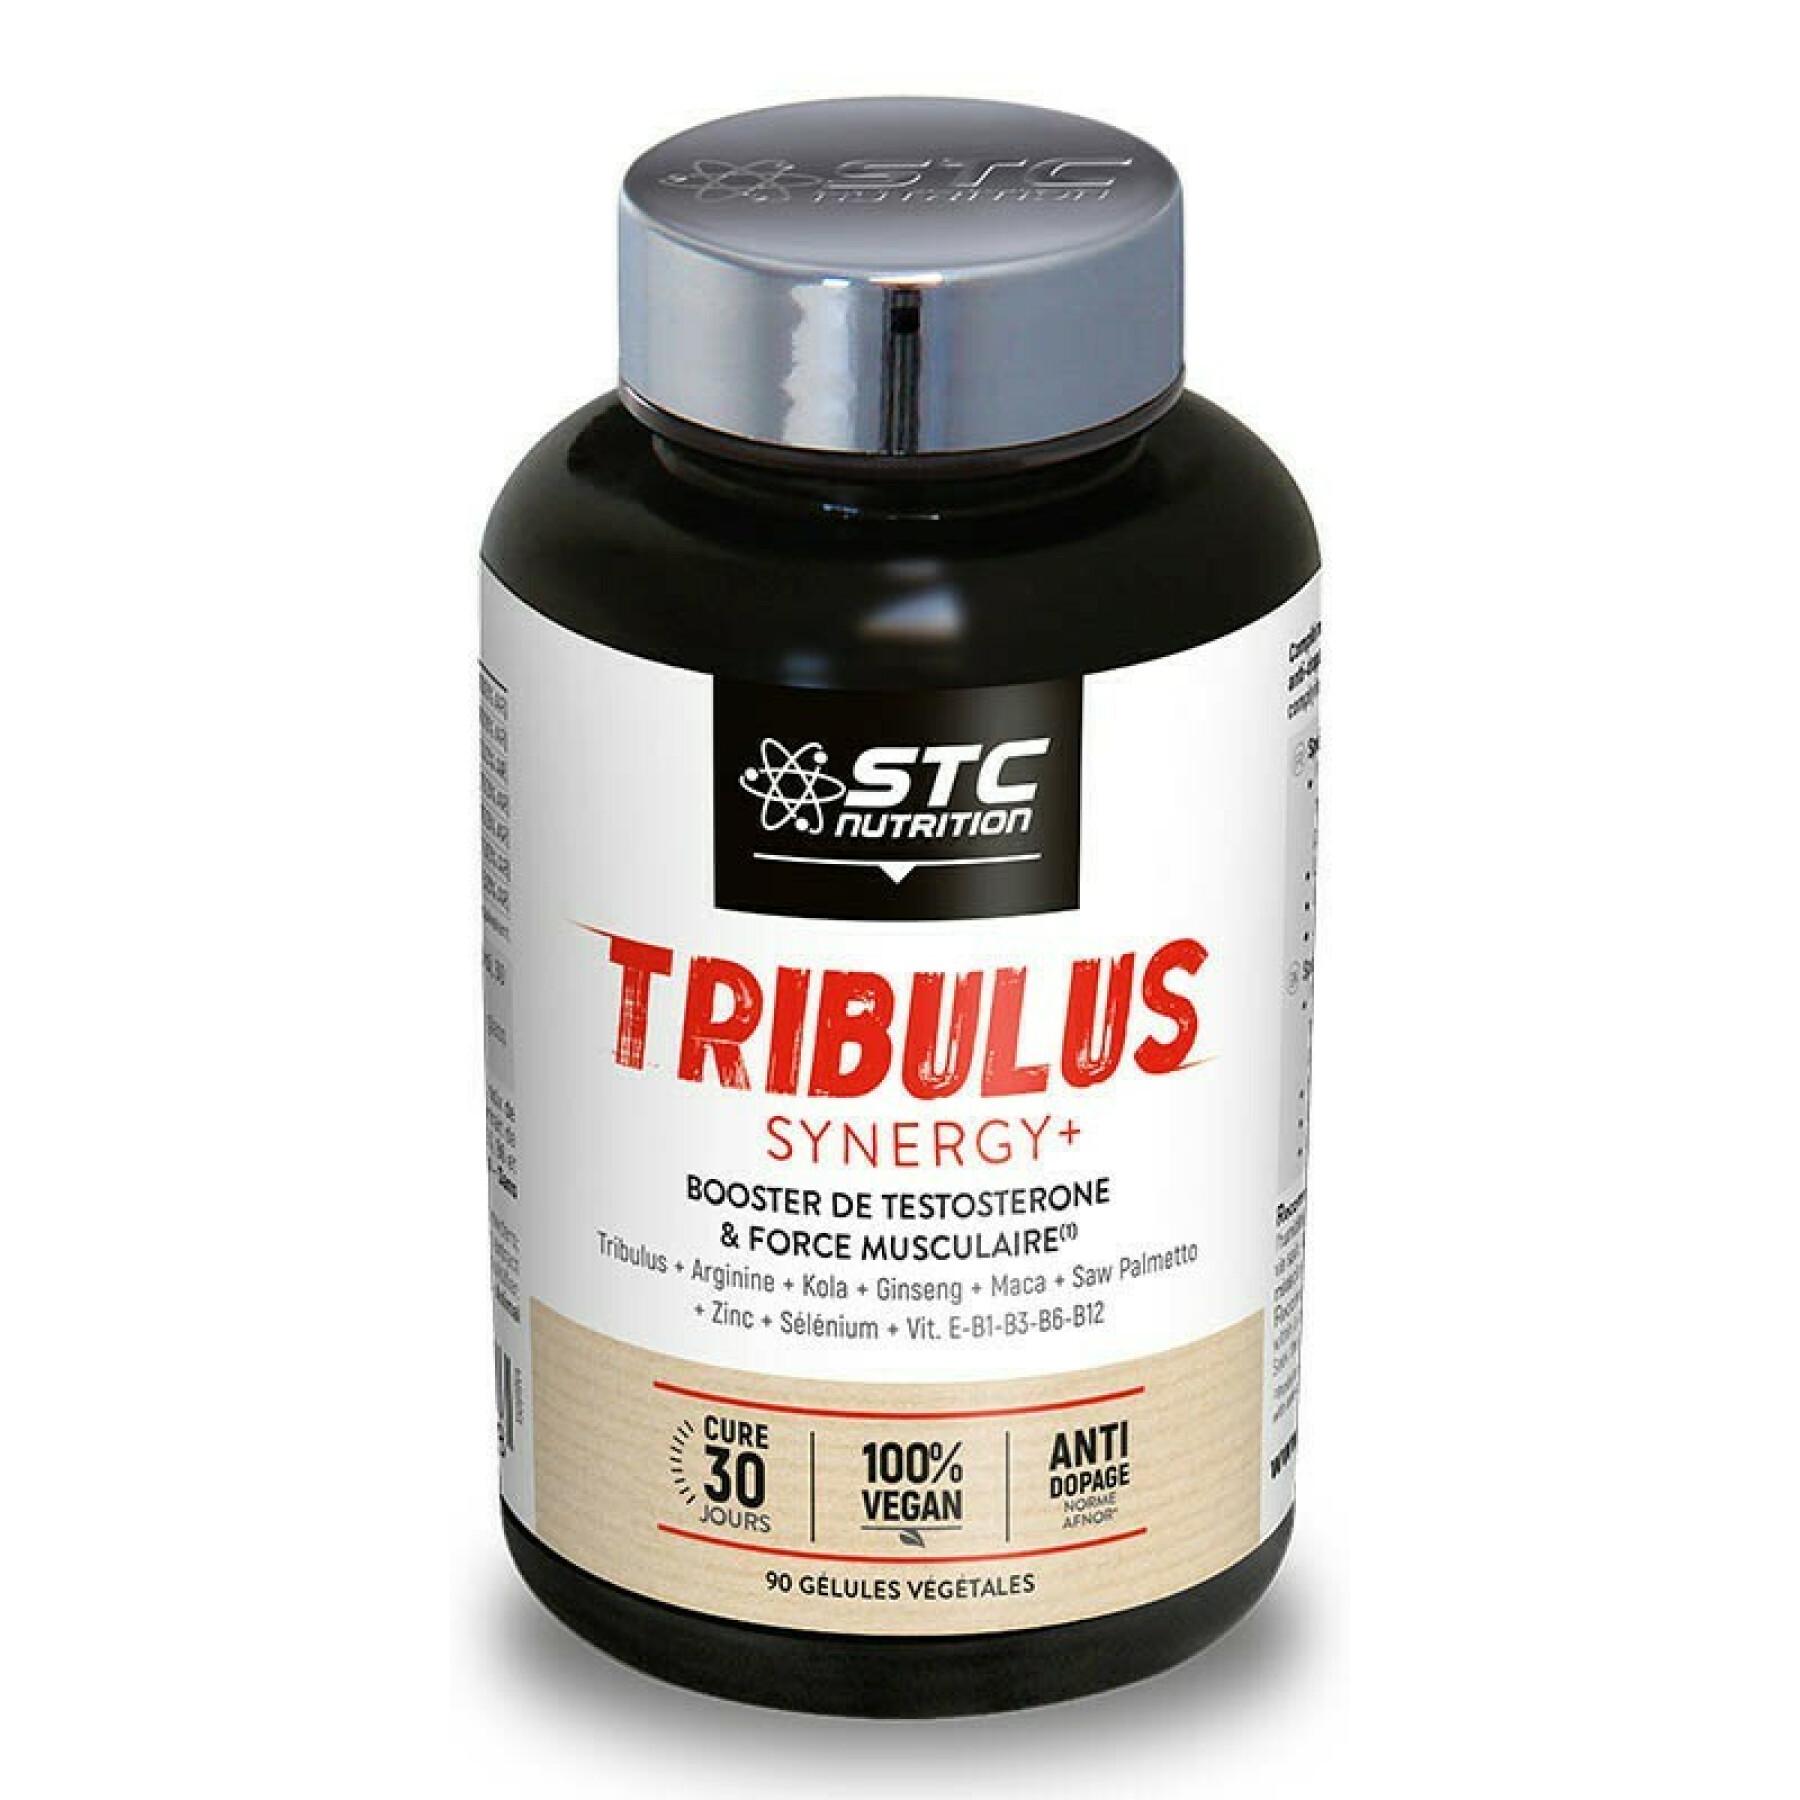 Tribulus synergy+ testosterone & muscle strength booster STC Nutrition - 90 gélules végétales